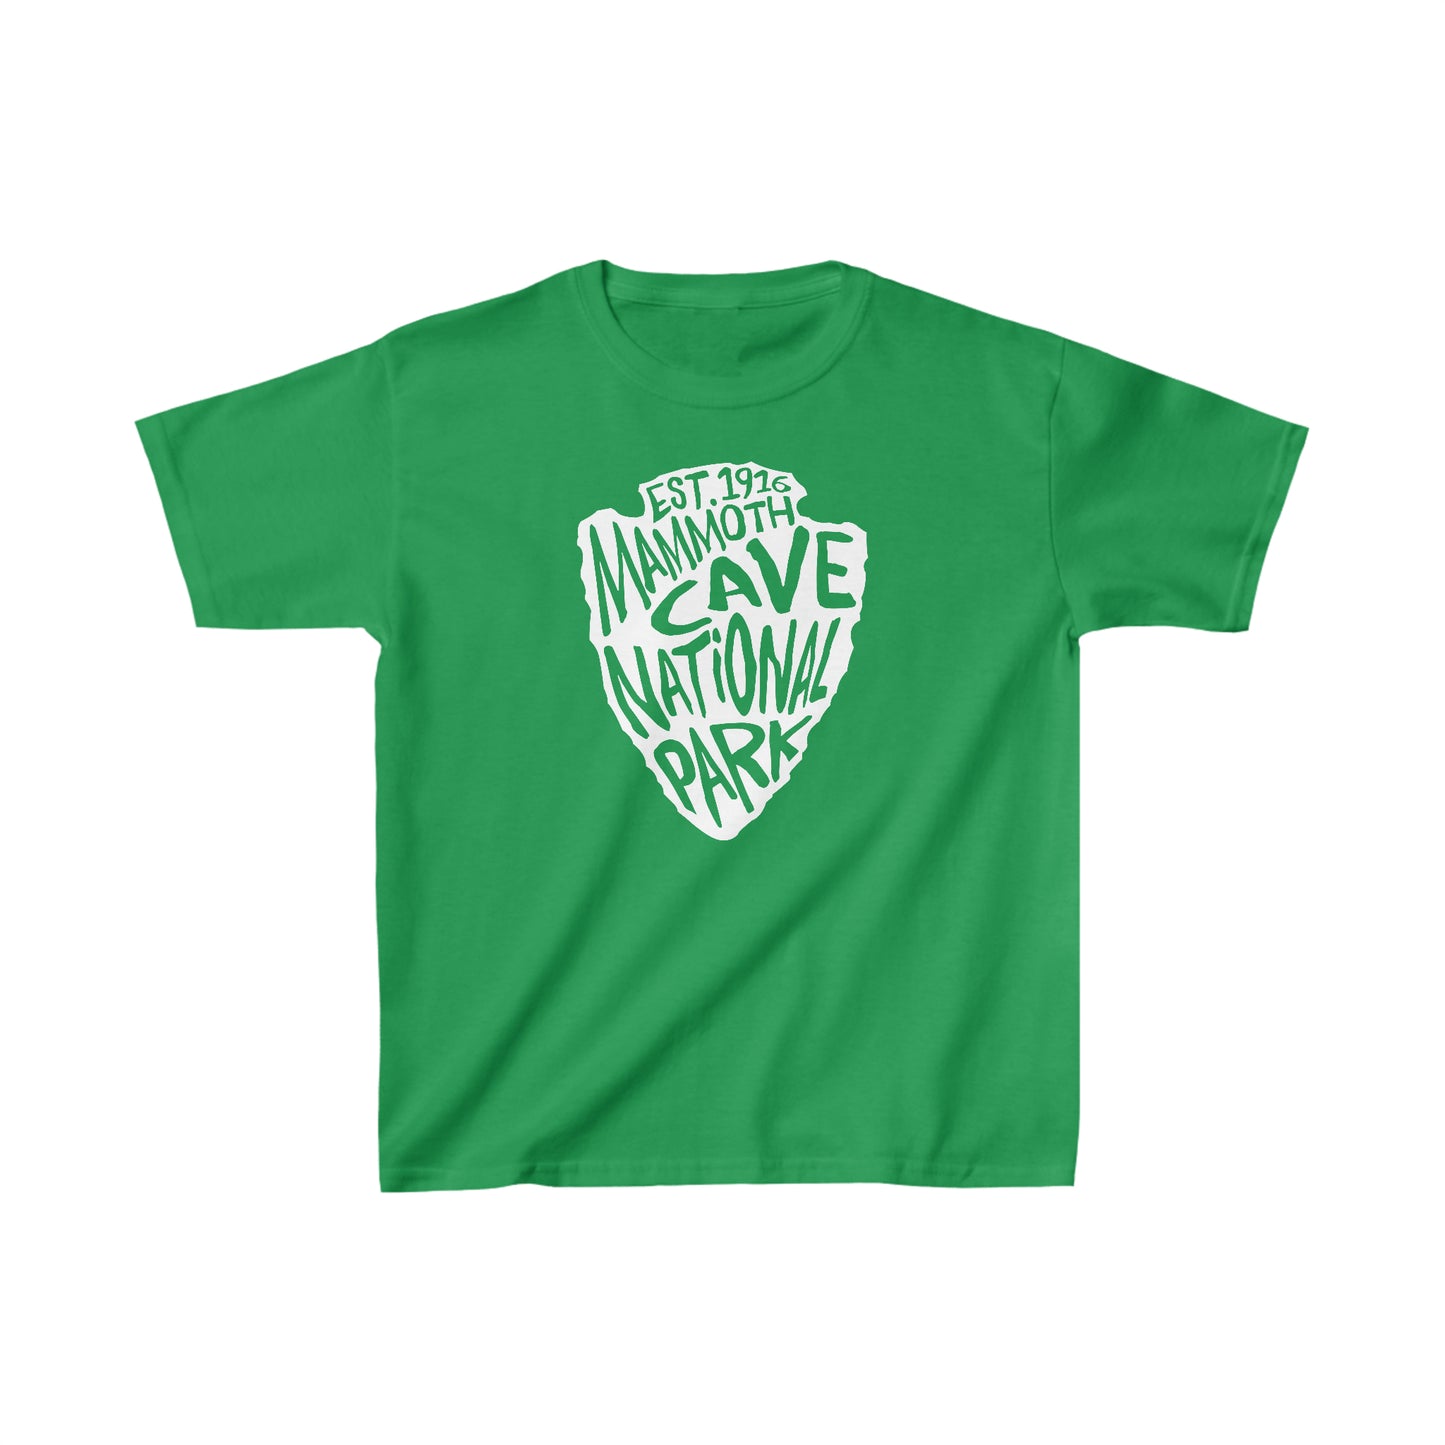 Mammoth Cave National Park Child T-Shirt - Arrowhead Design